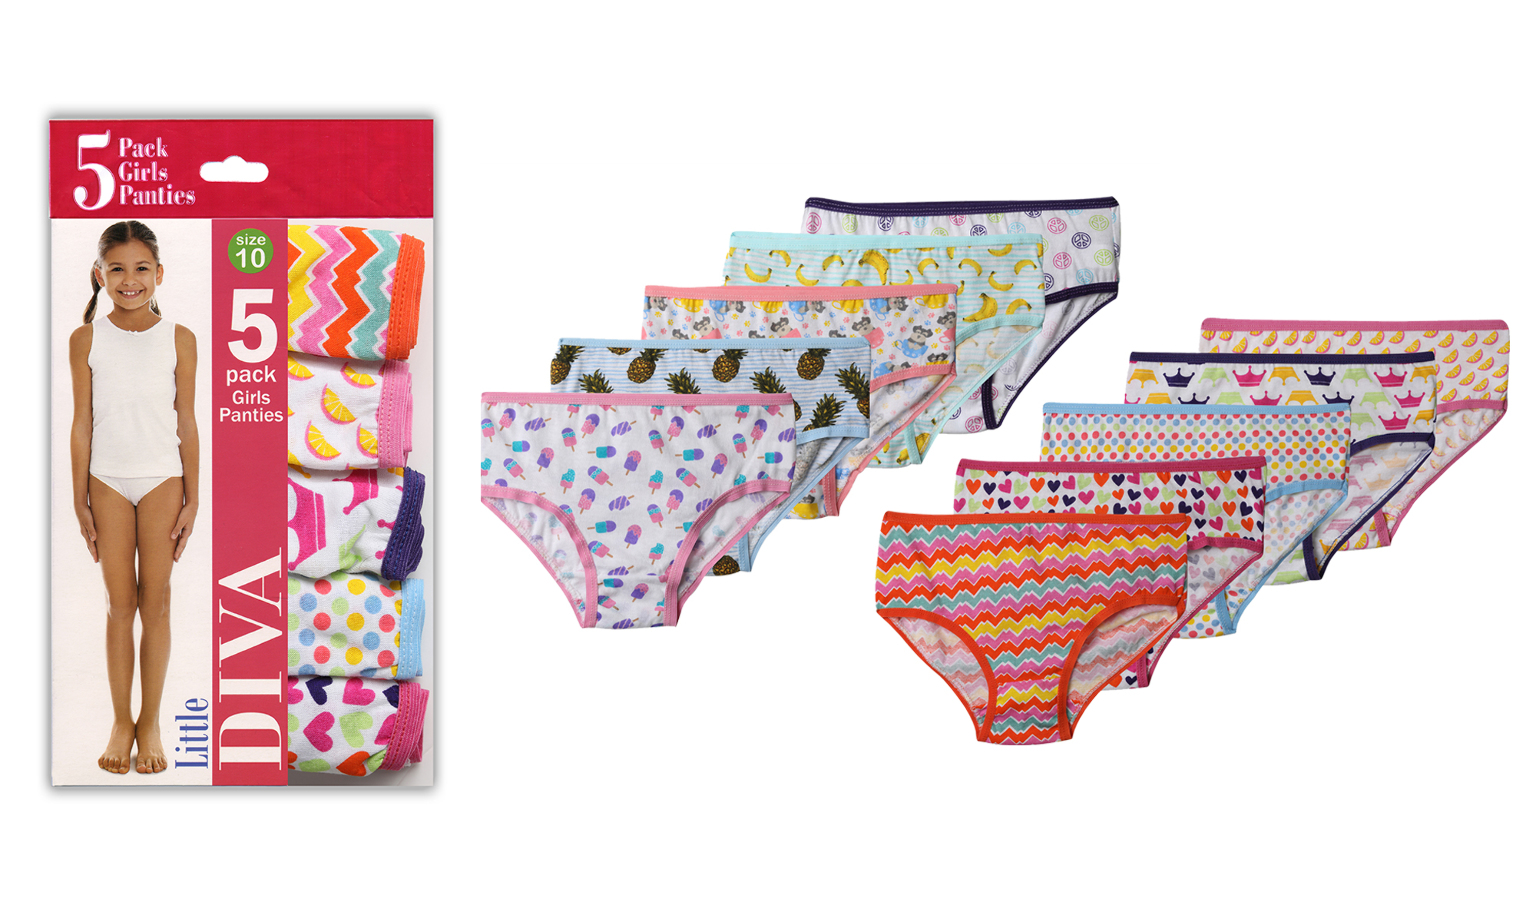 Bulk Girl's Panties - 5 Pack, Little Diva Prints, Size 8 - DollarDays